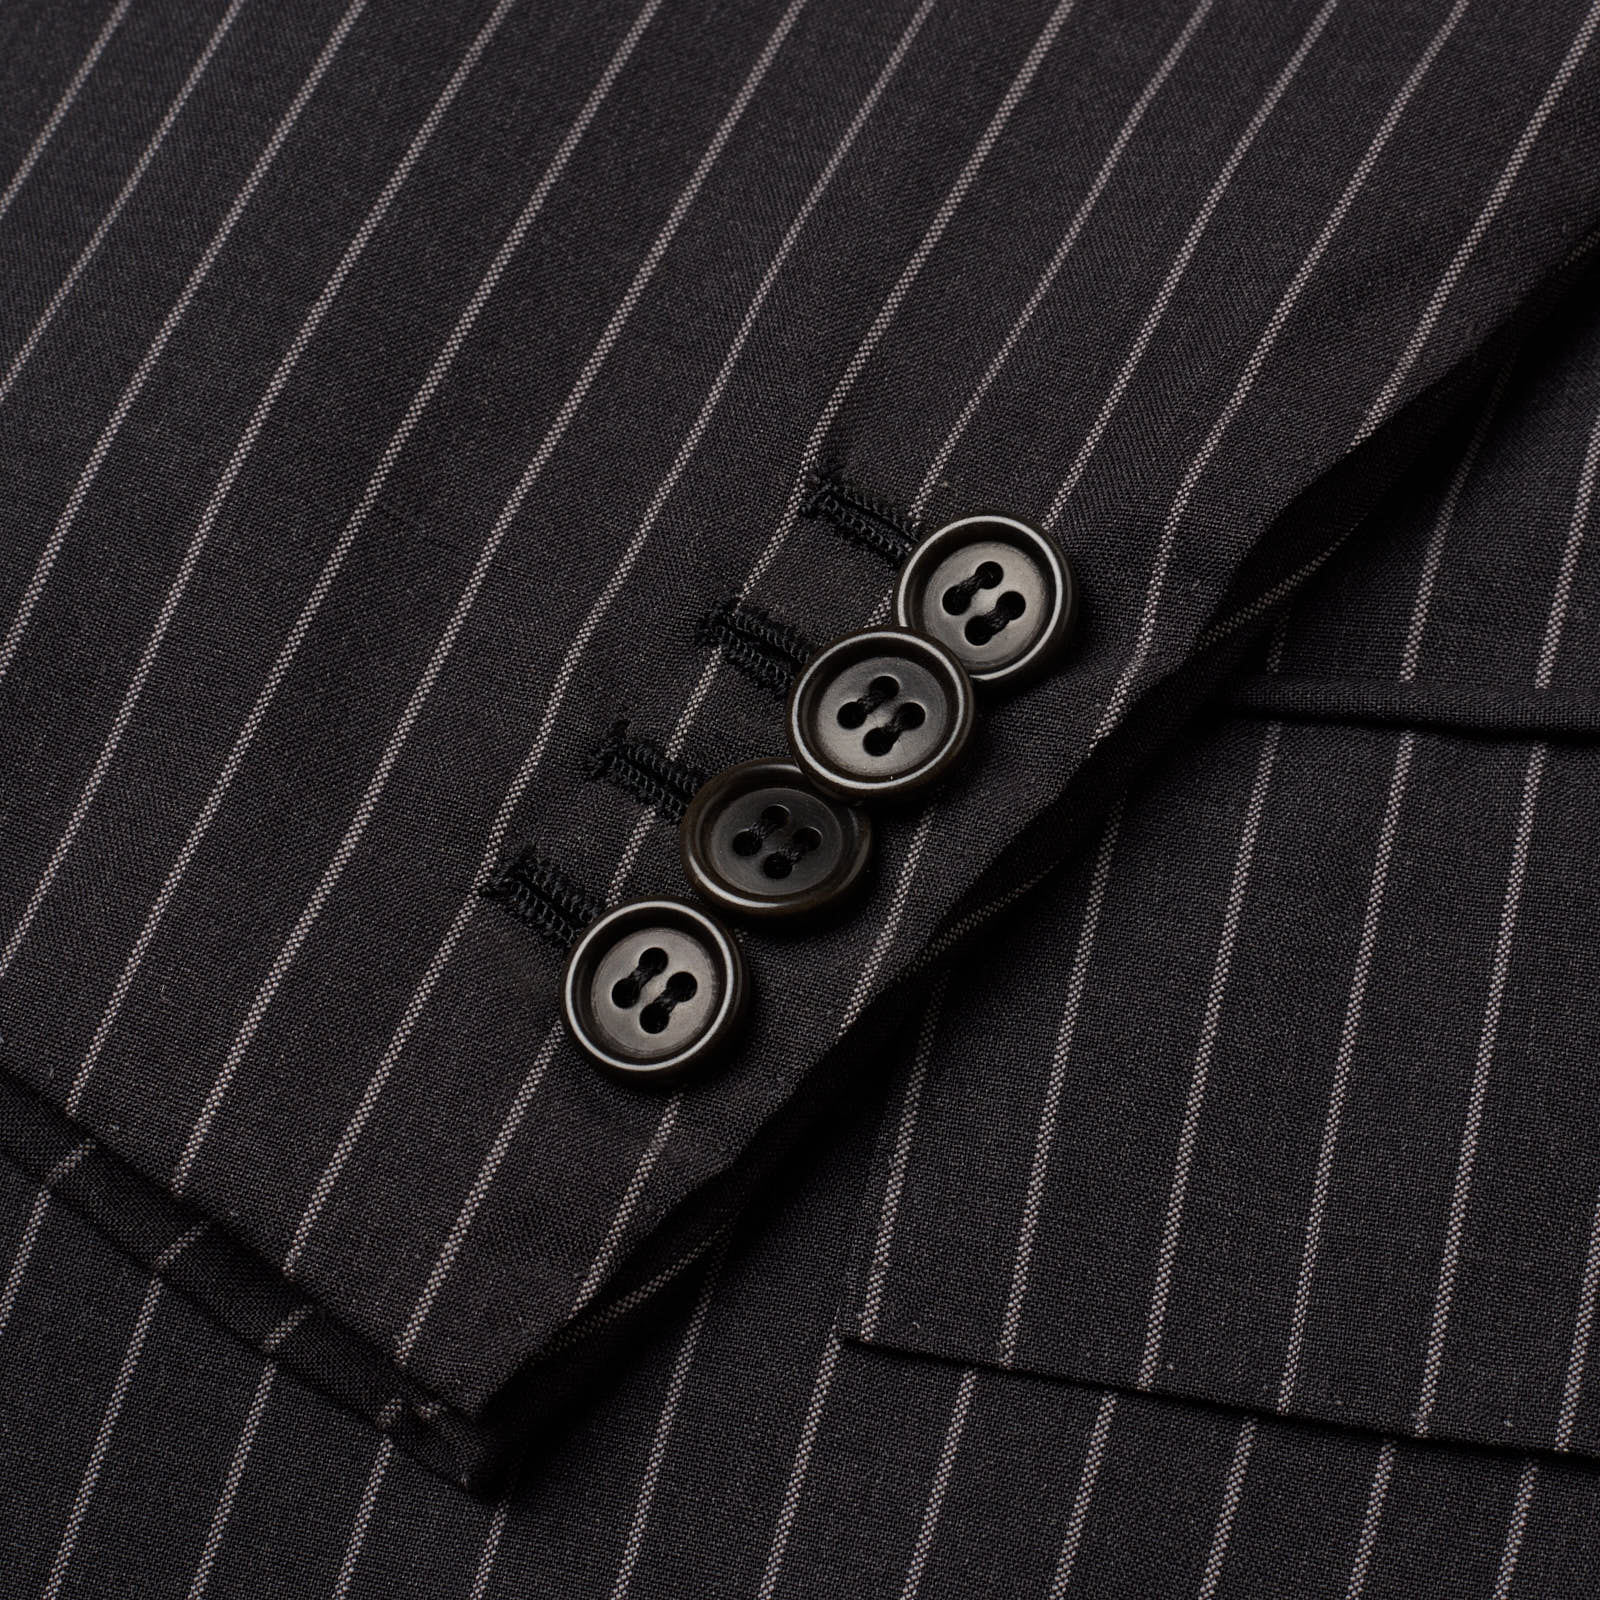 KITON Napoli Dark Gray Striped Wool 14 Micron Super 180's Jacket EU 50 NEW US 40